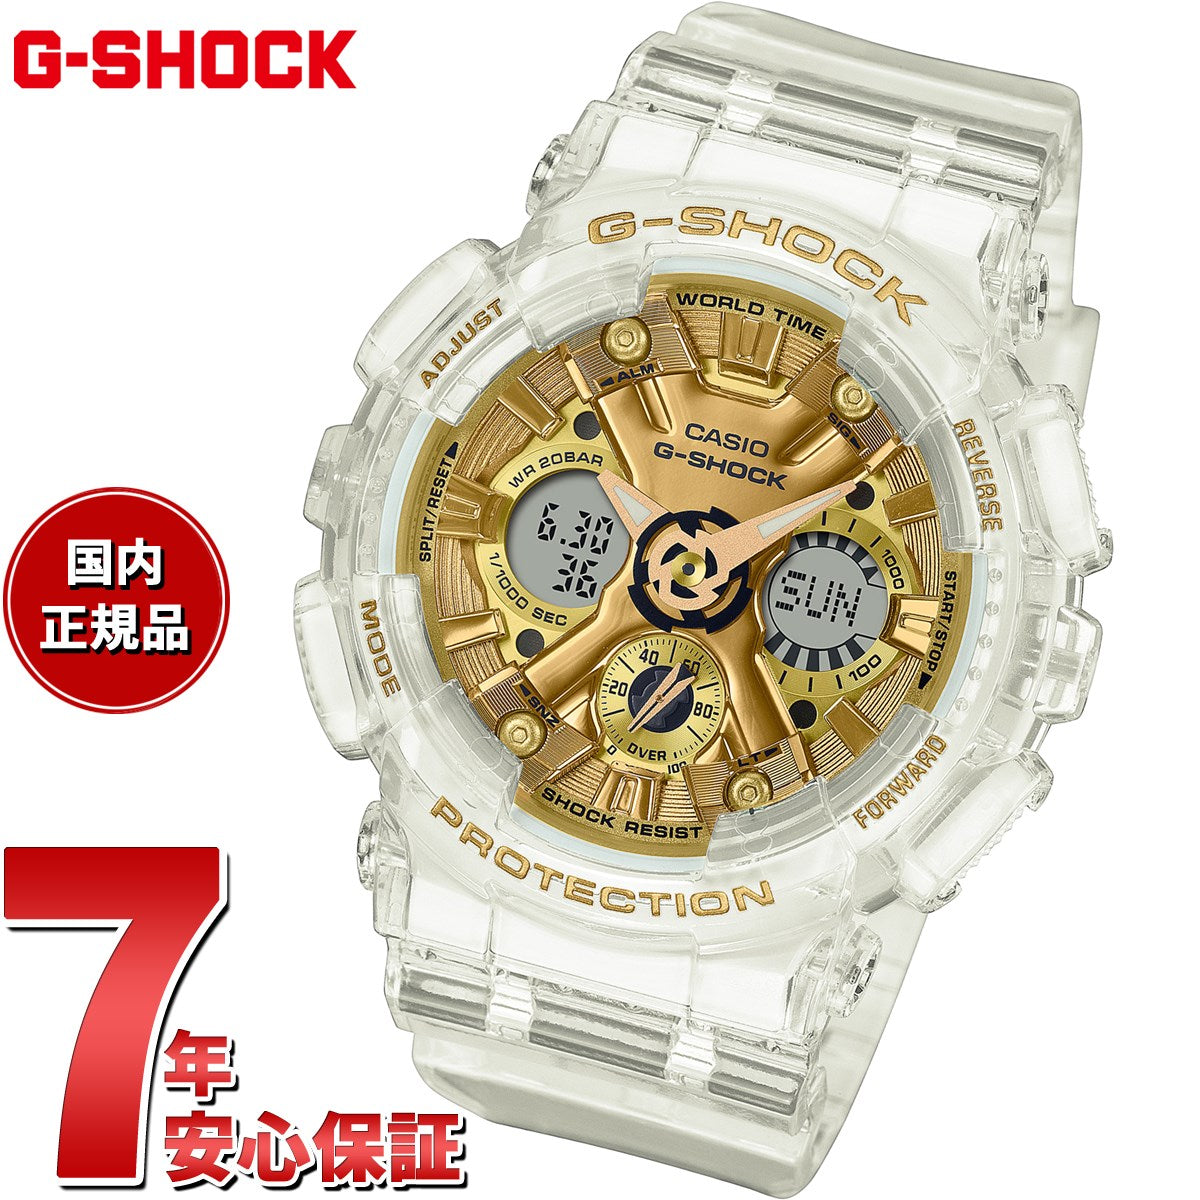 G-SHOCK アナデジ カシオ Gショック CASIO 腕時計 メンズ レディース